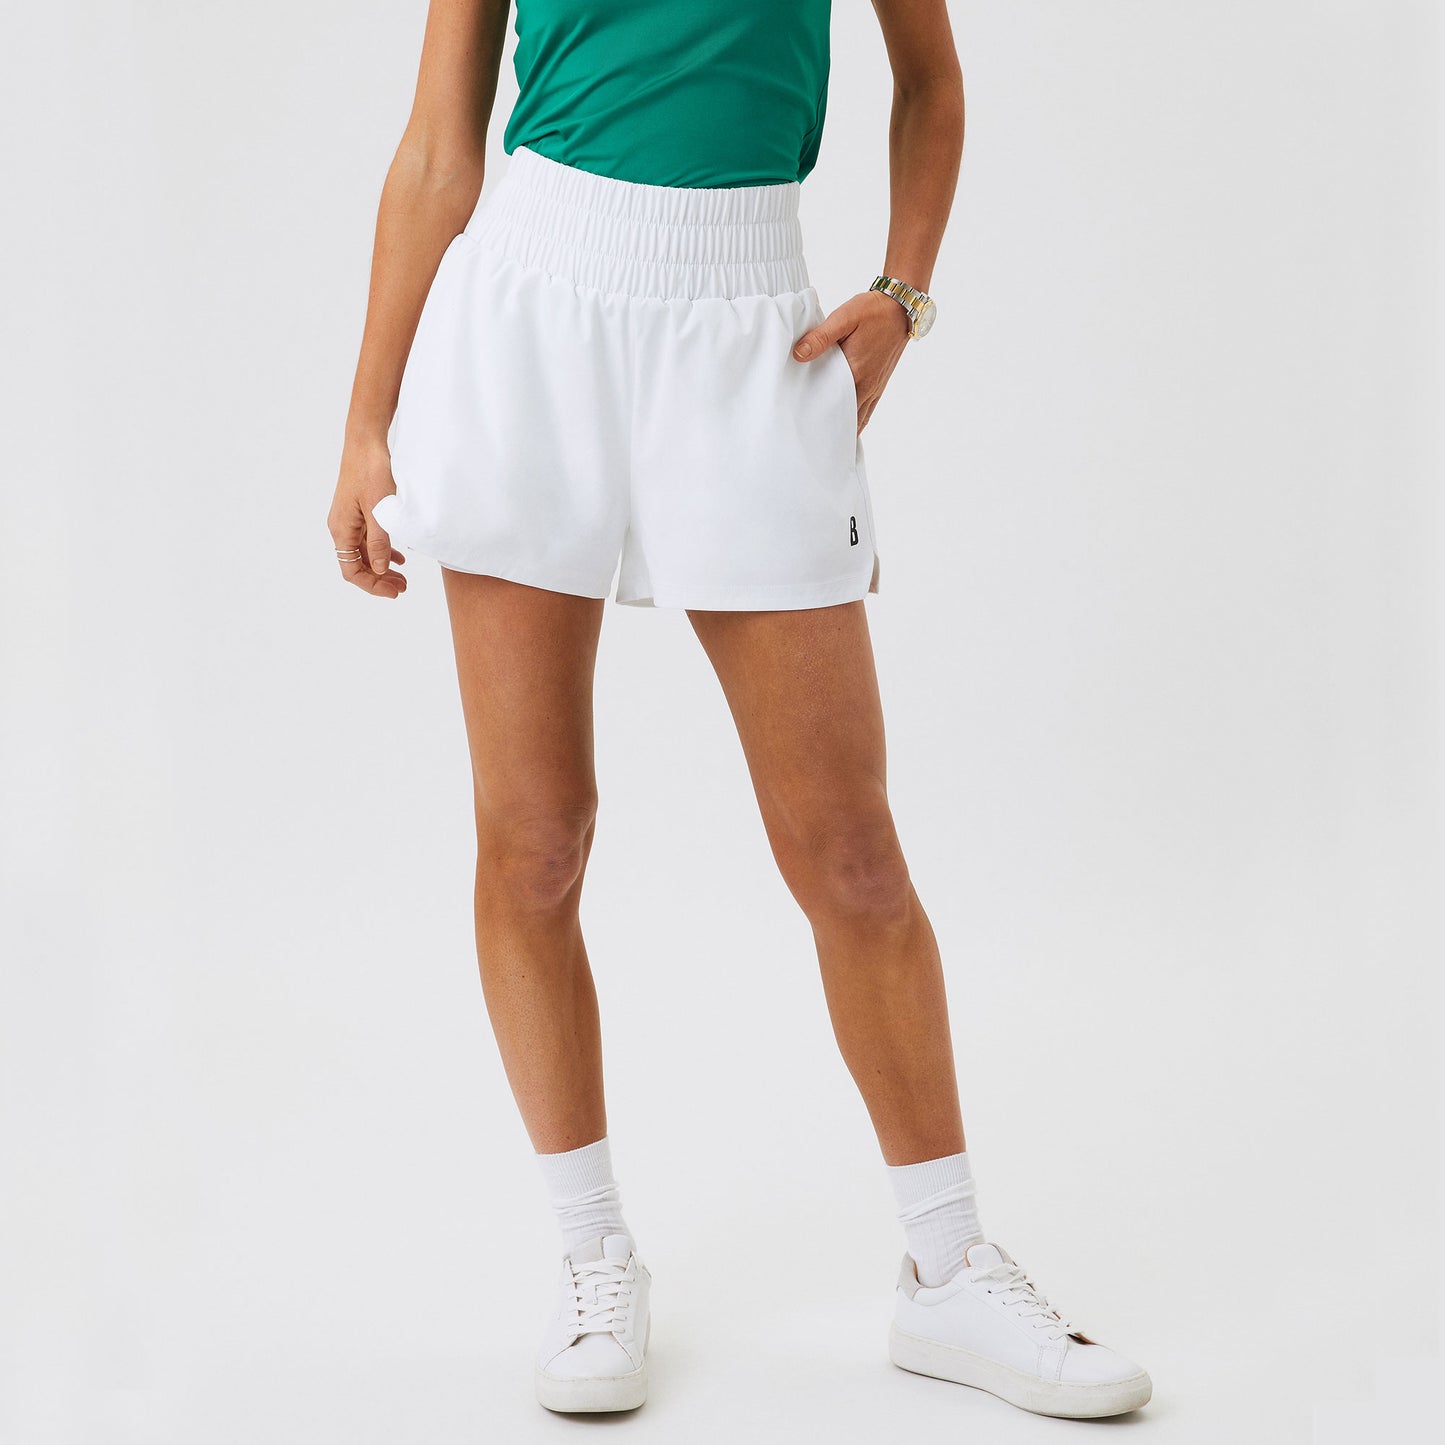 Björn Borg Ace Women's Tennis Shorts White (1)